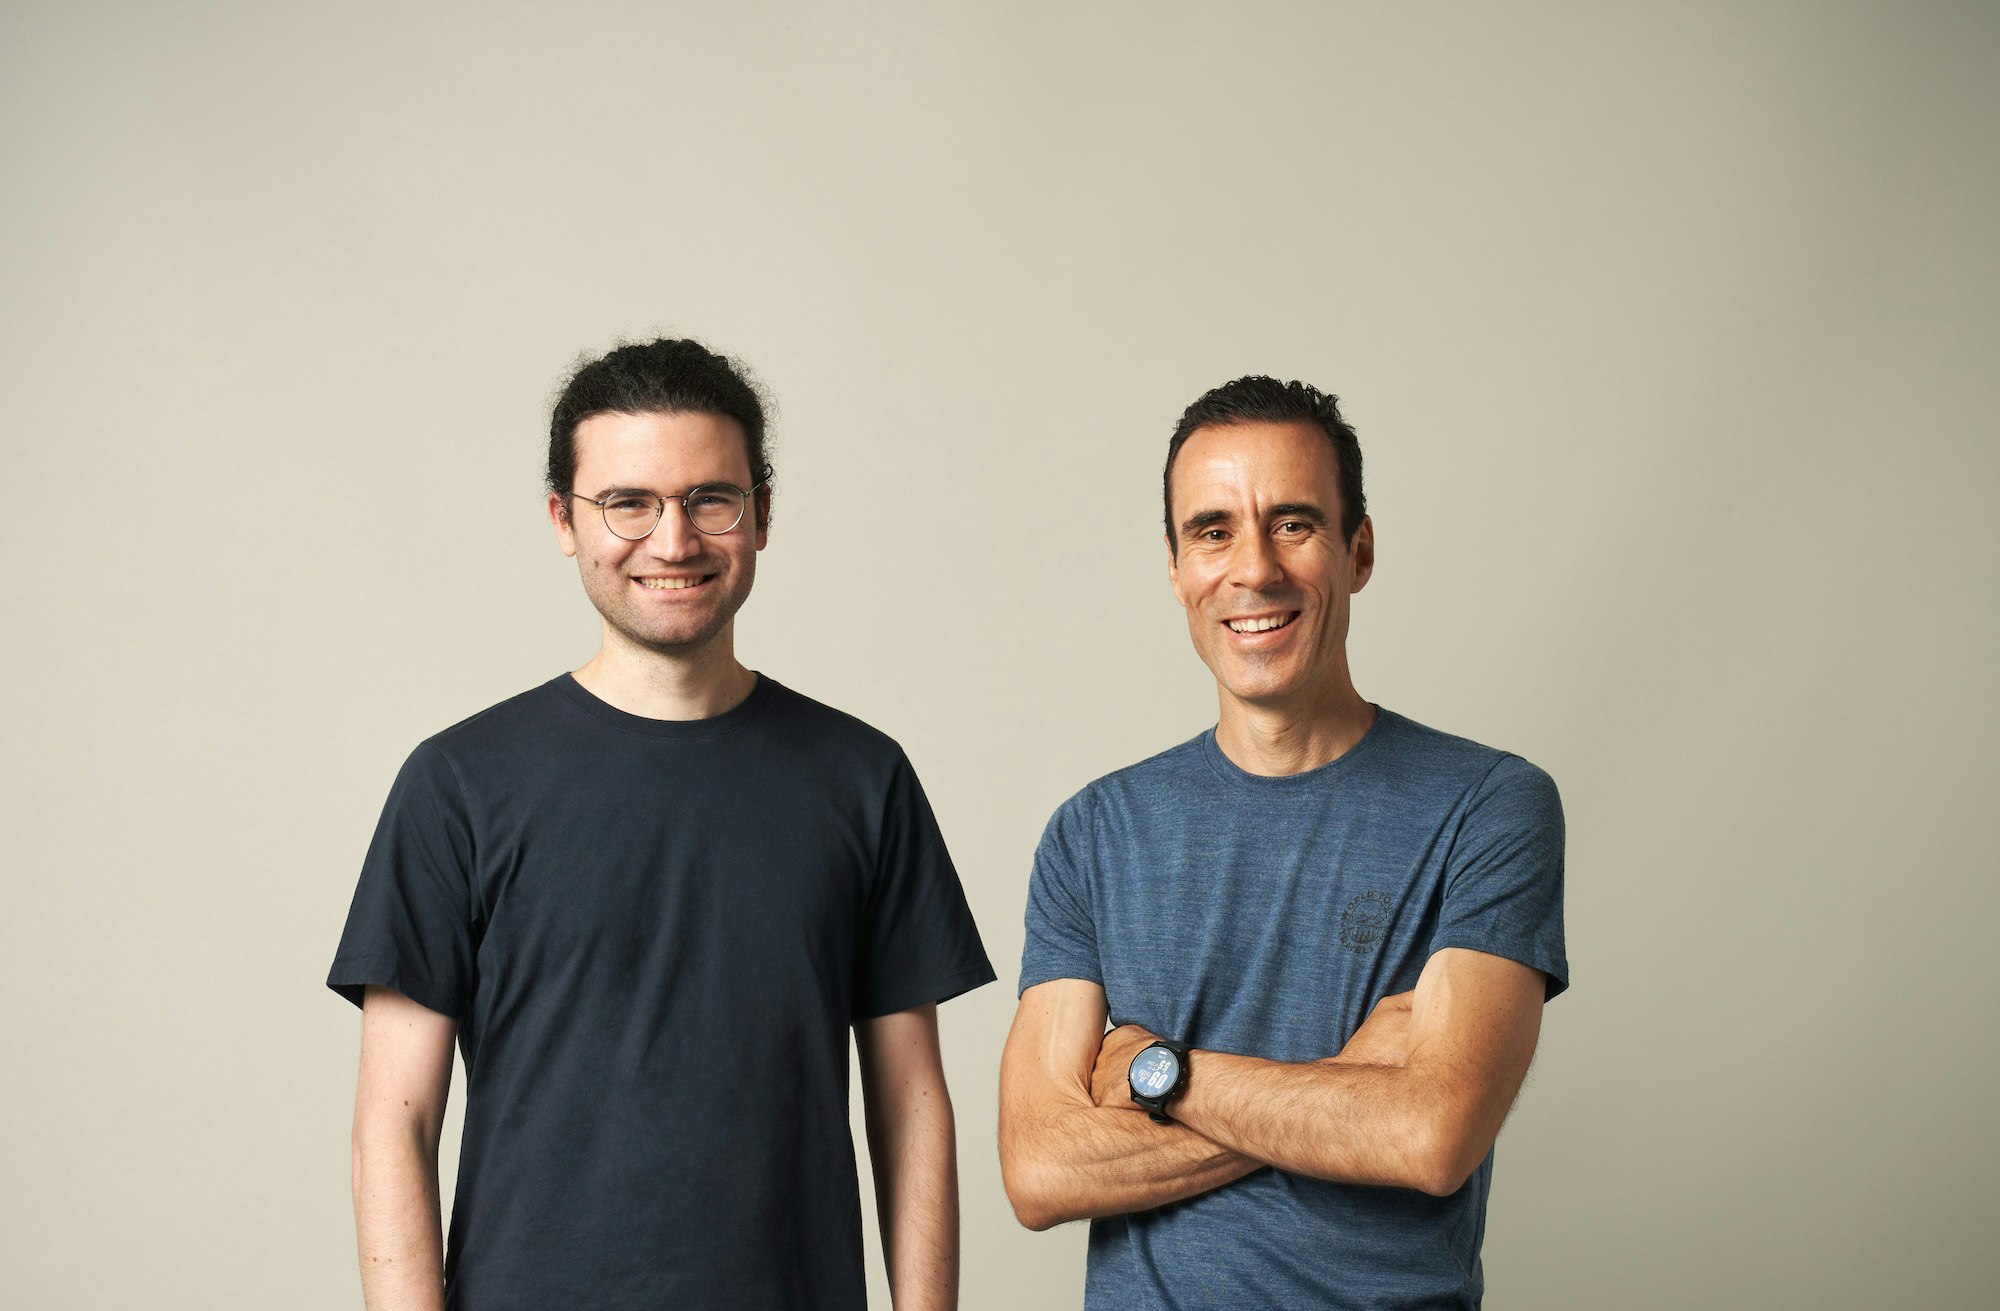 Epiterna cofounders Kevin Perez and Alex Ocampo, smiling for a headshot